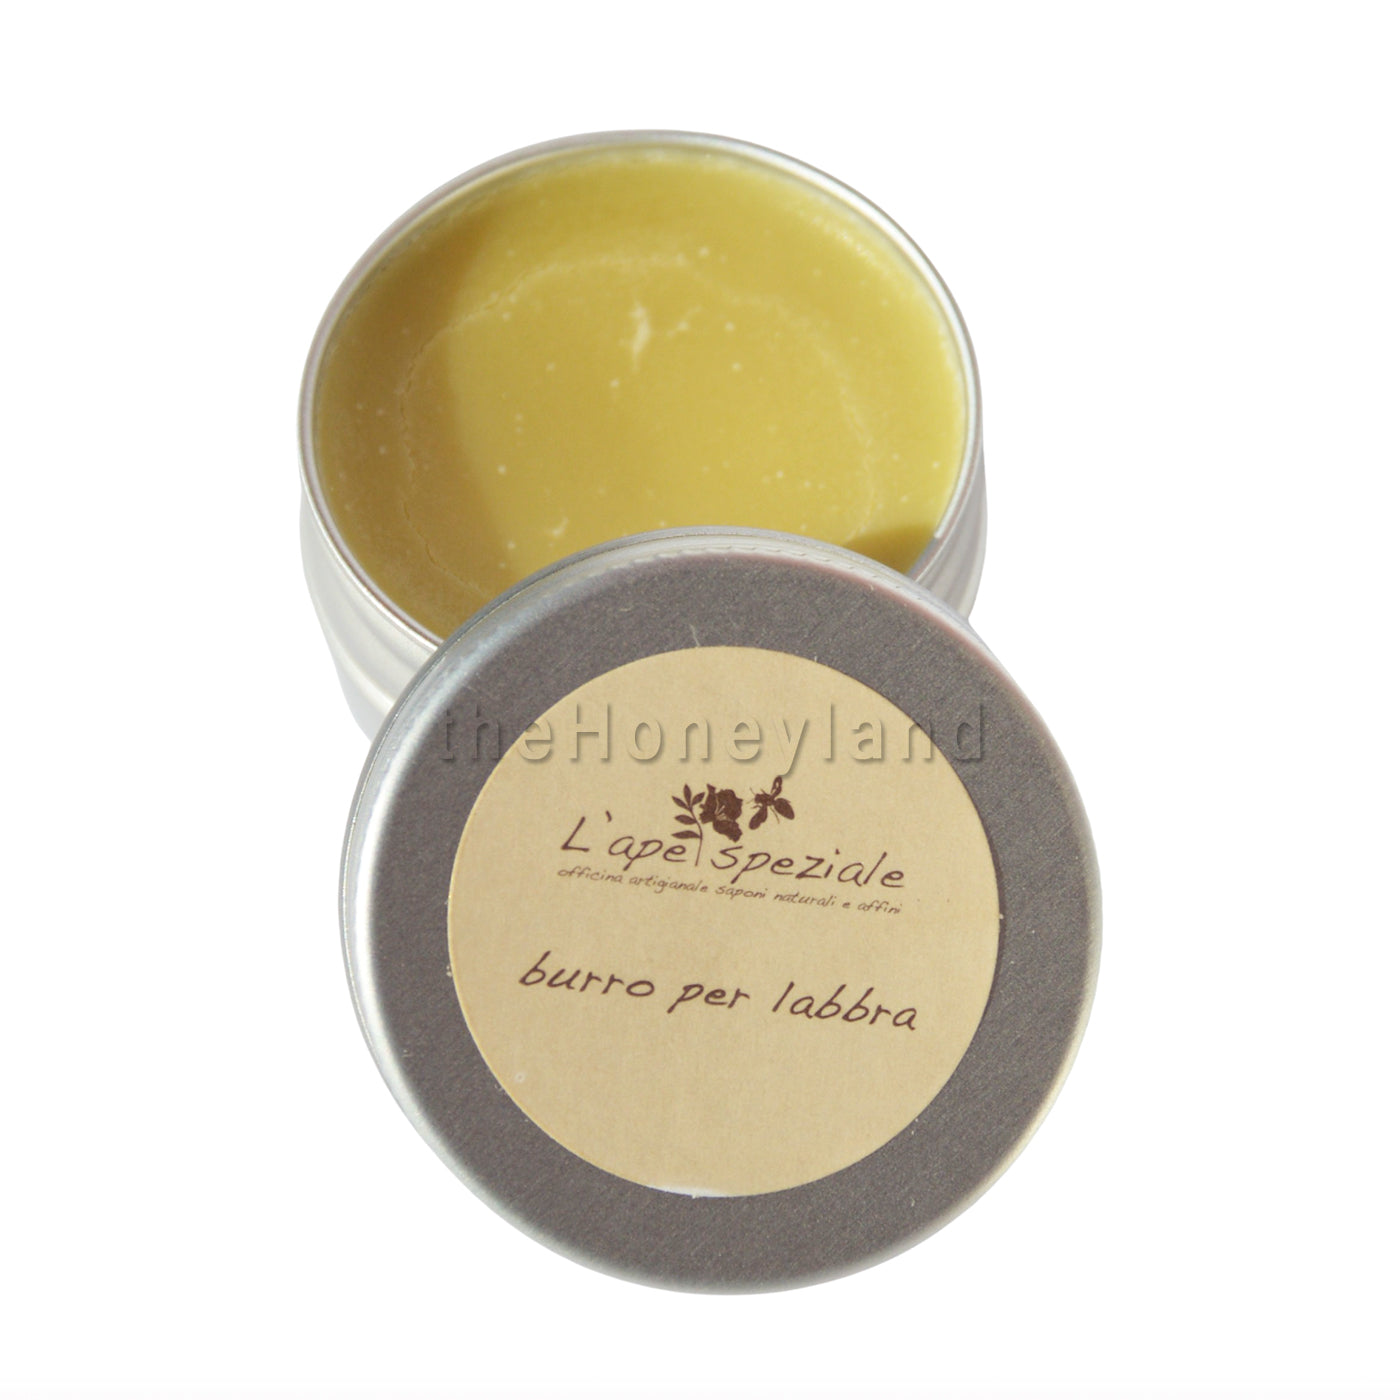 Lip balm with beeswax, EVO oil and orange